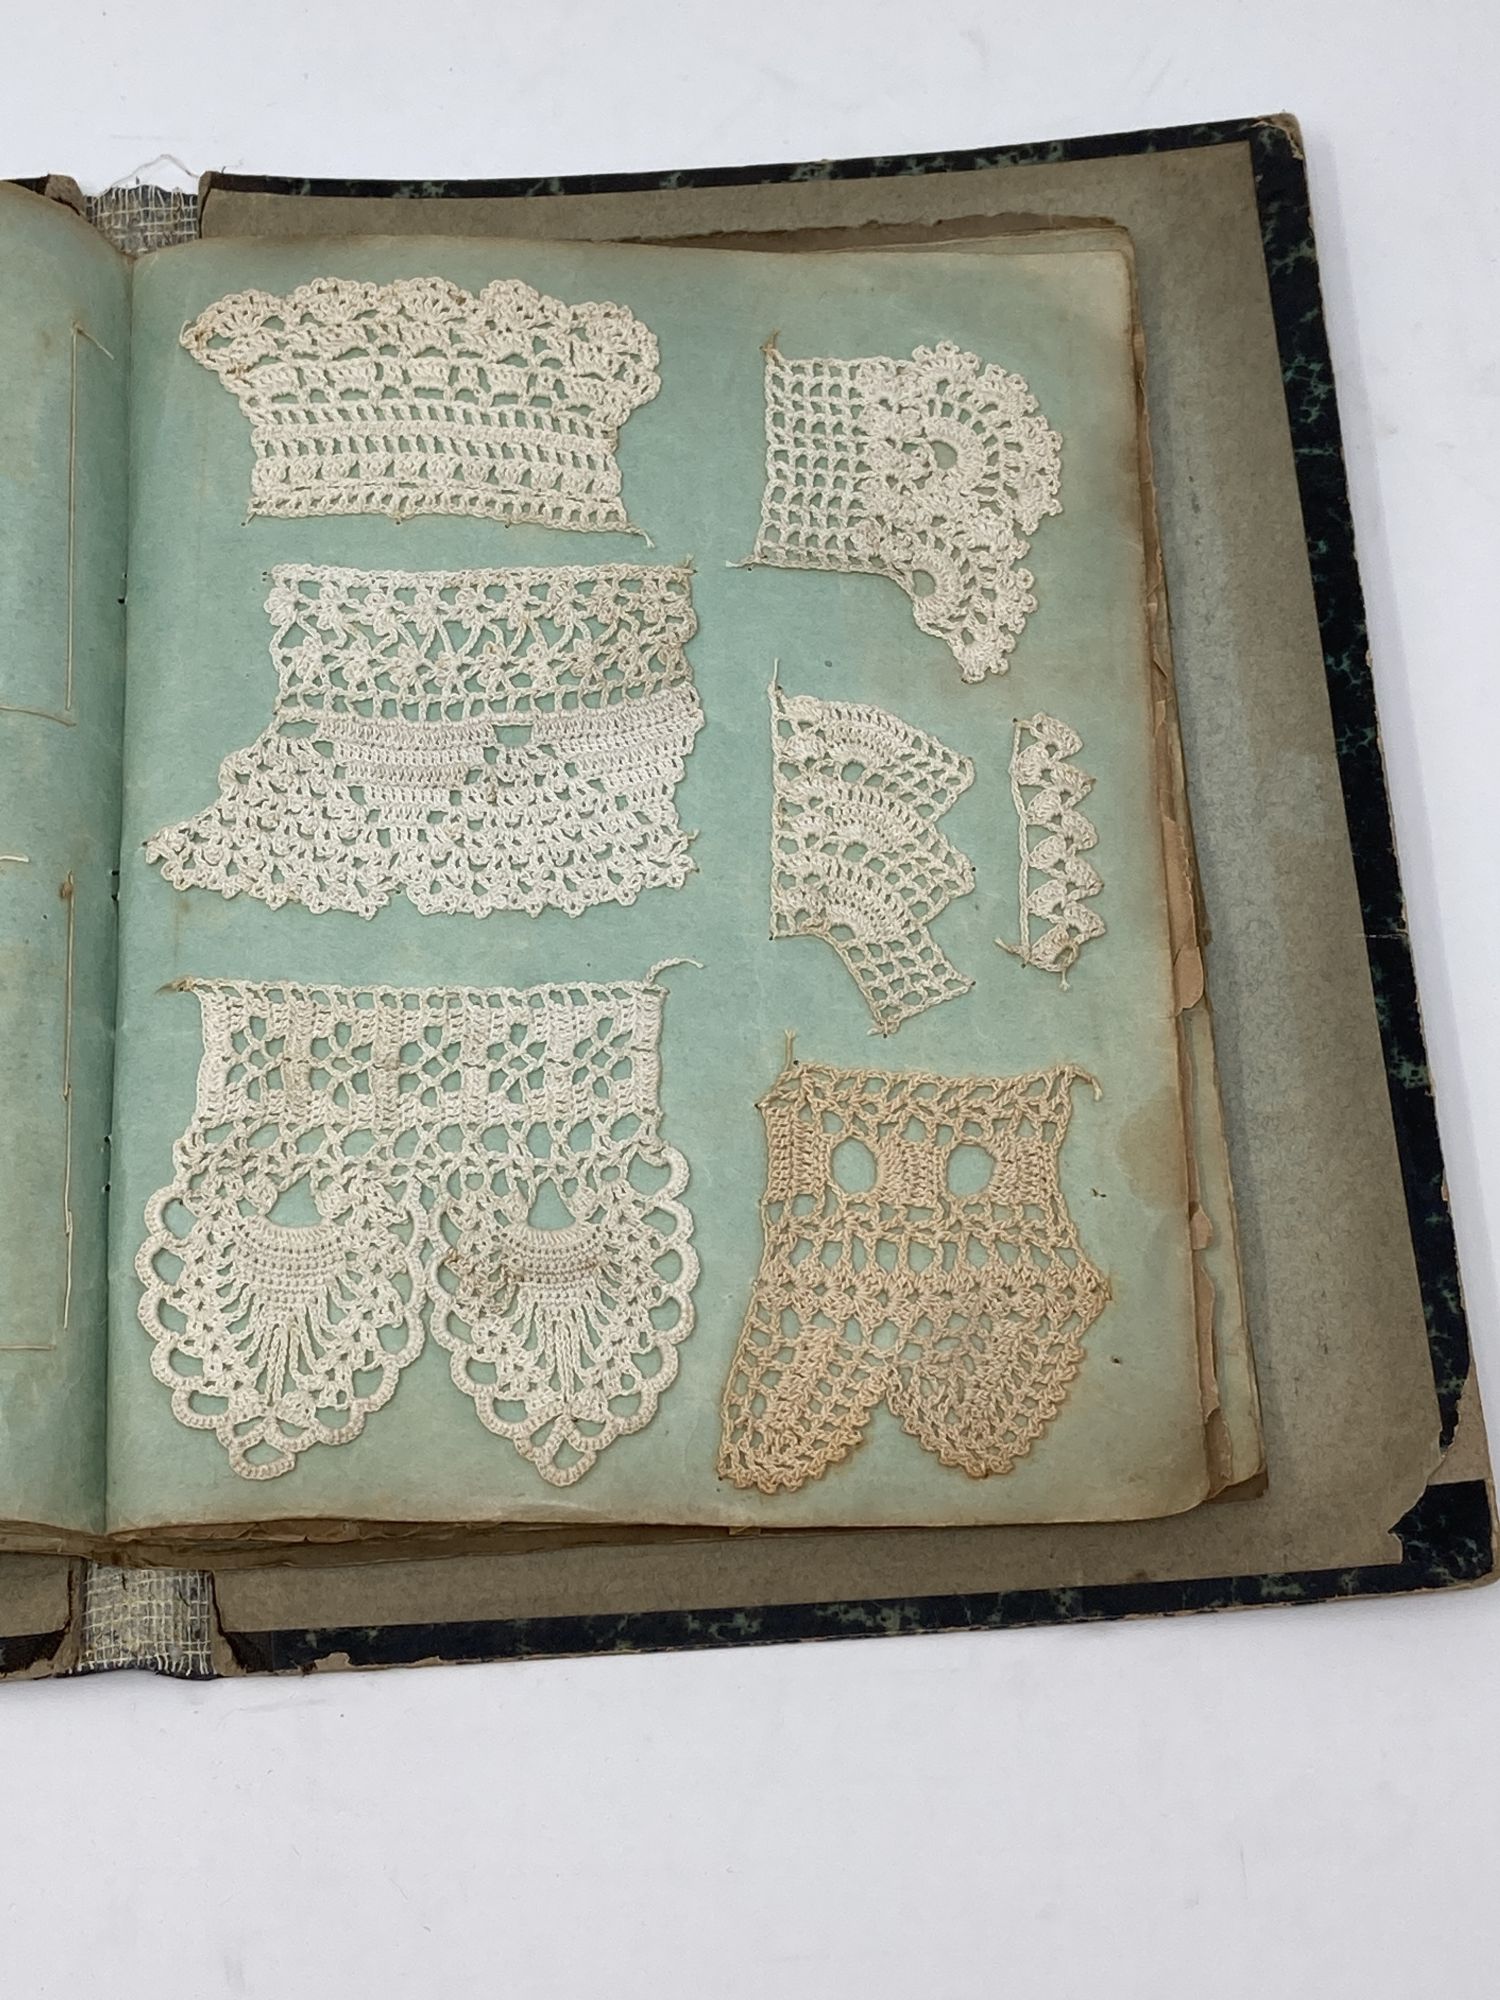 Schvach, Clmence - Handmade Lace Sample Book Made by Clemence Schvach (Thoreaux), 1877-1935